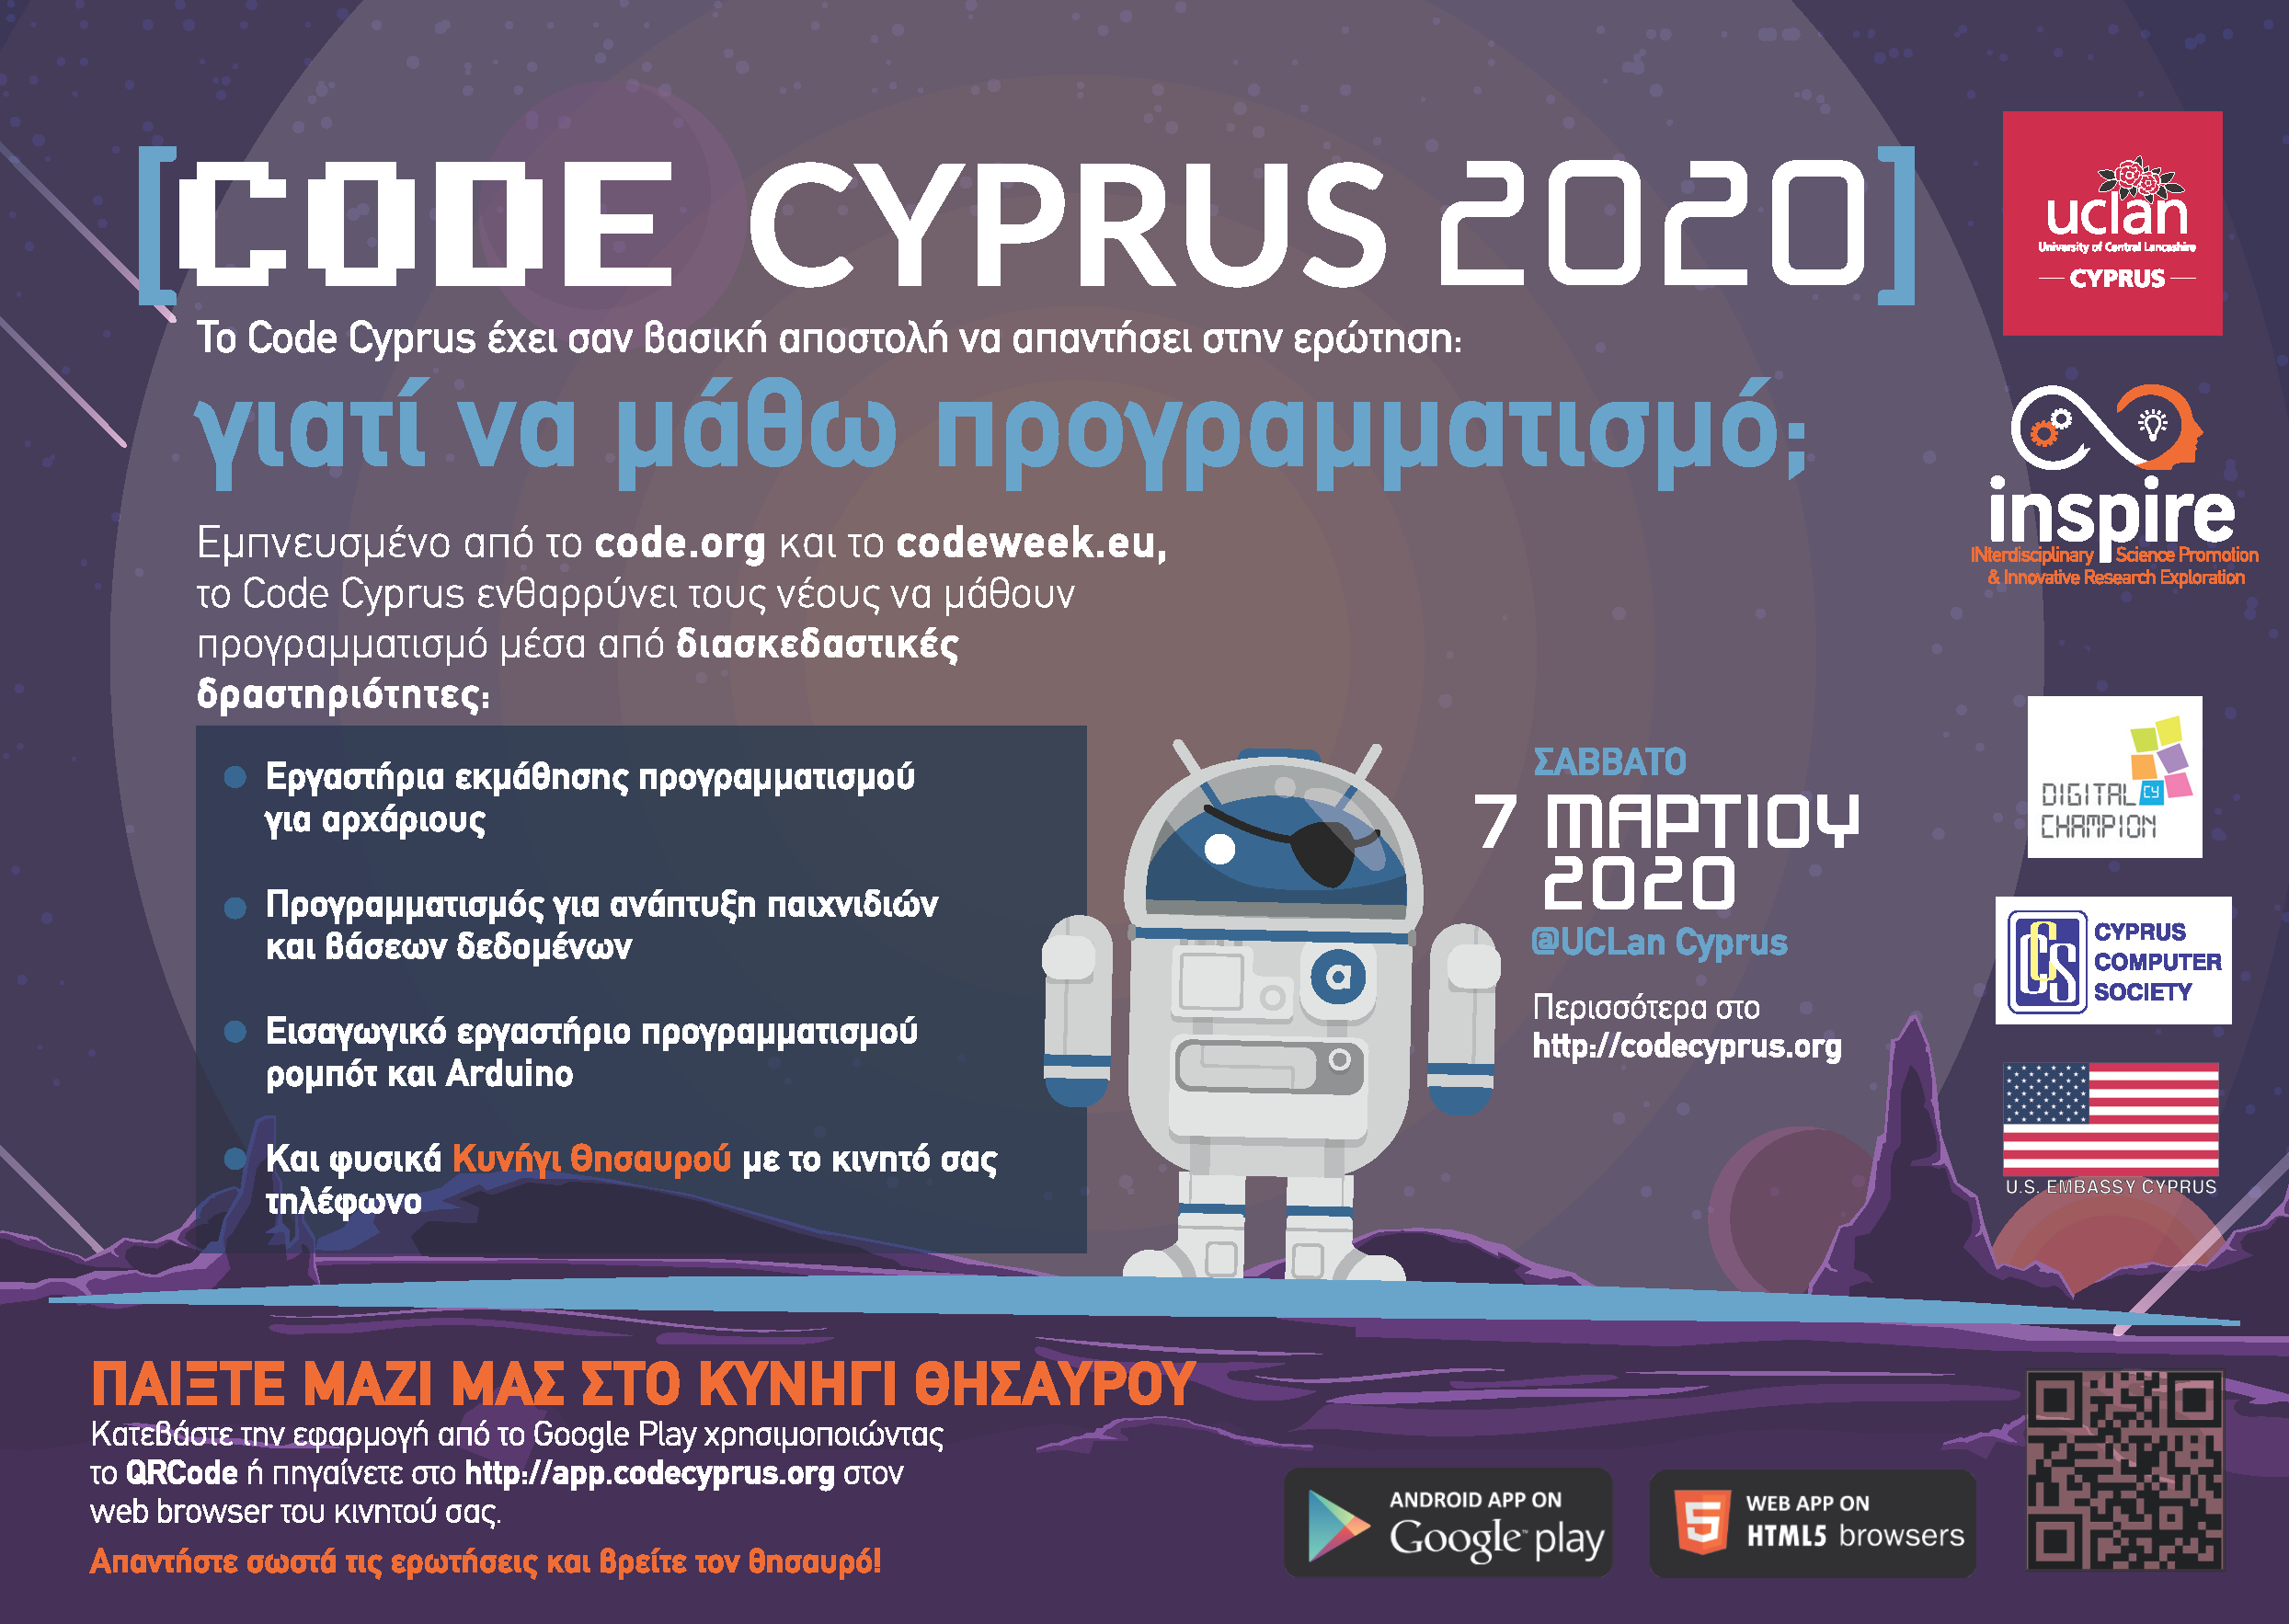 Code Cyprus 2020 leaflet